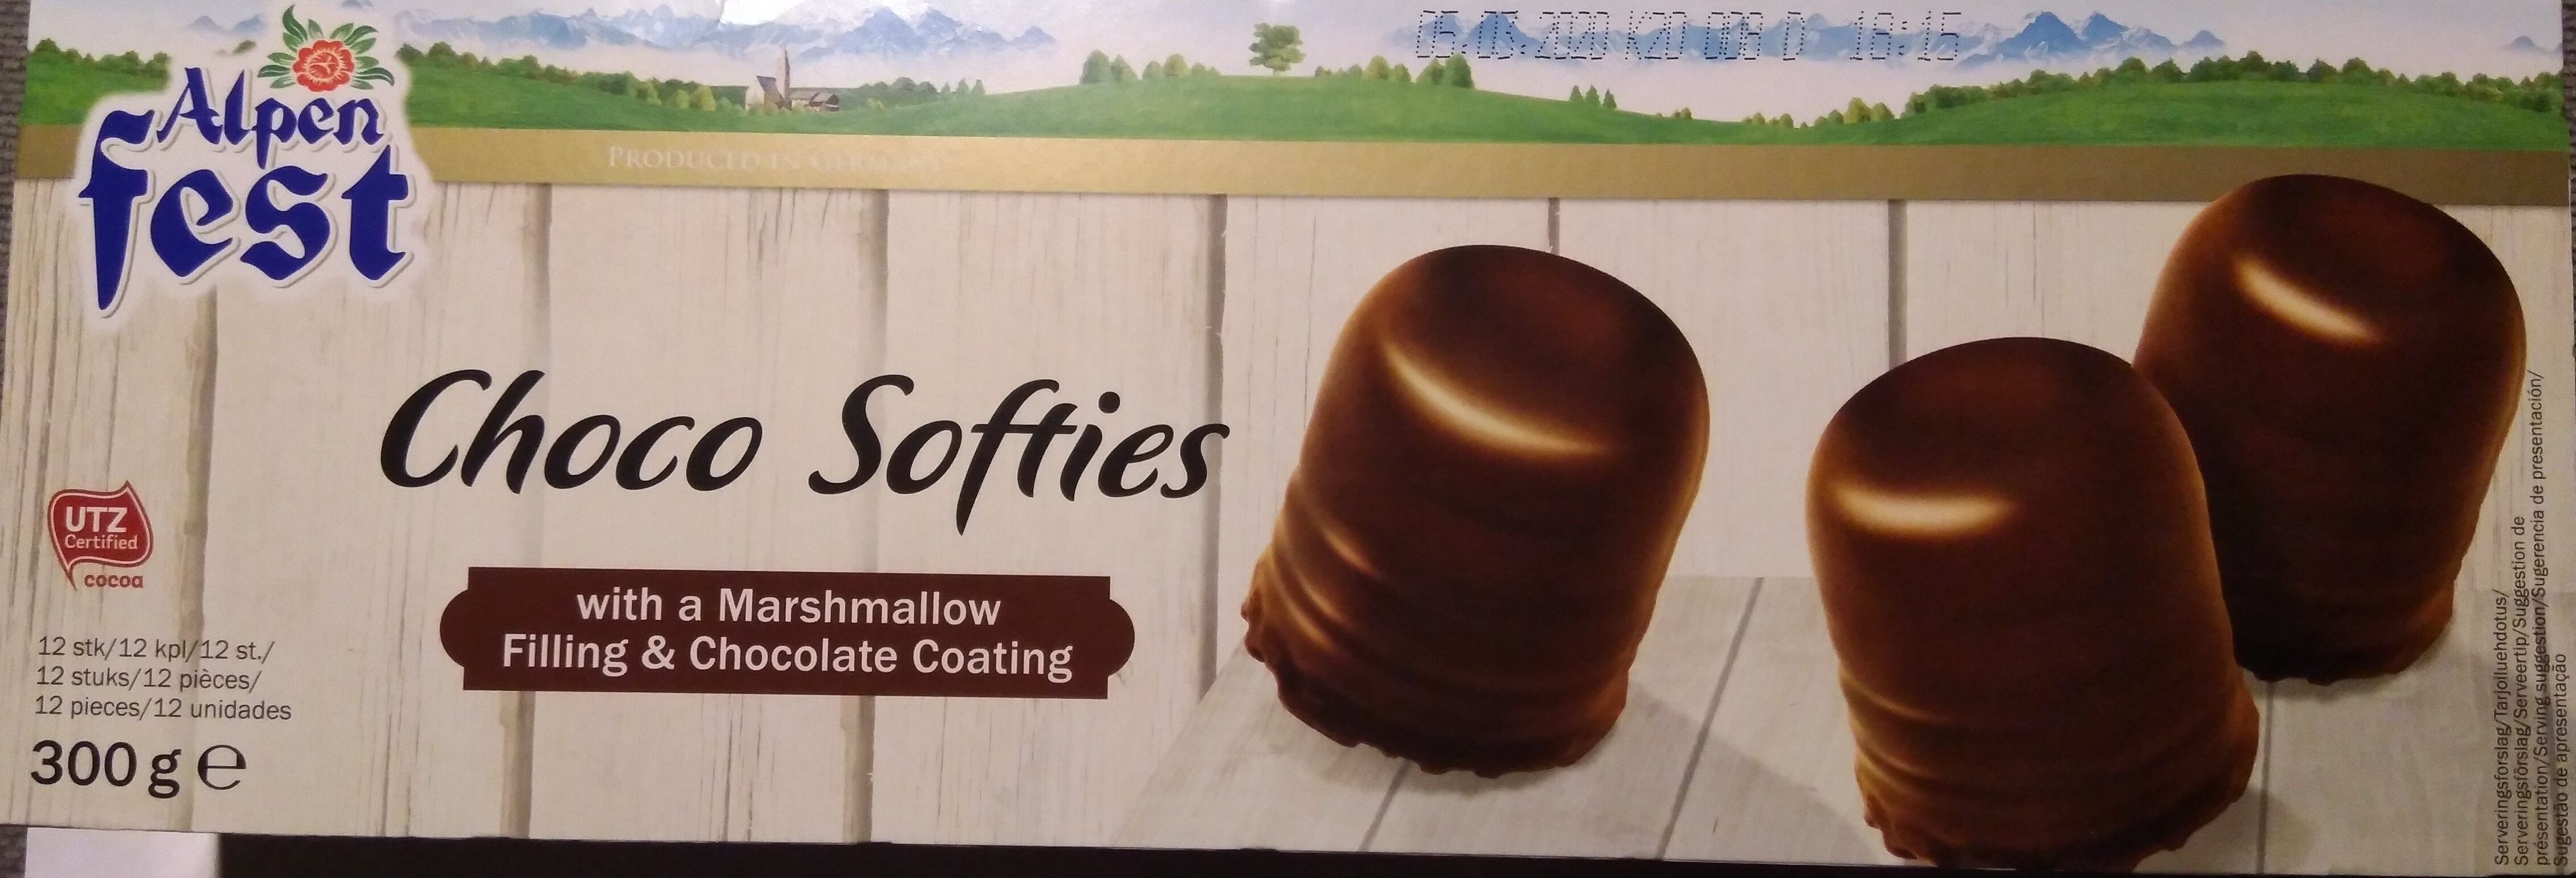 Choco Softies - Tuote - fi